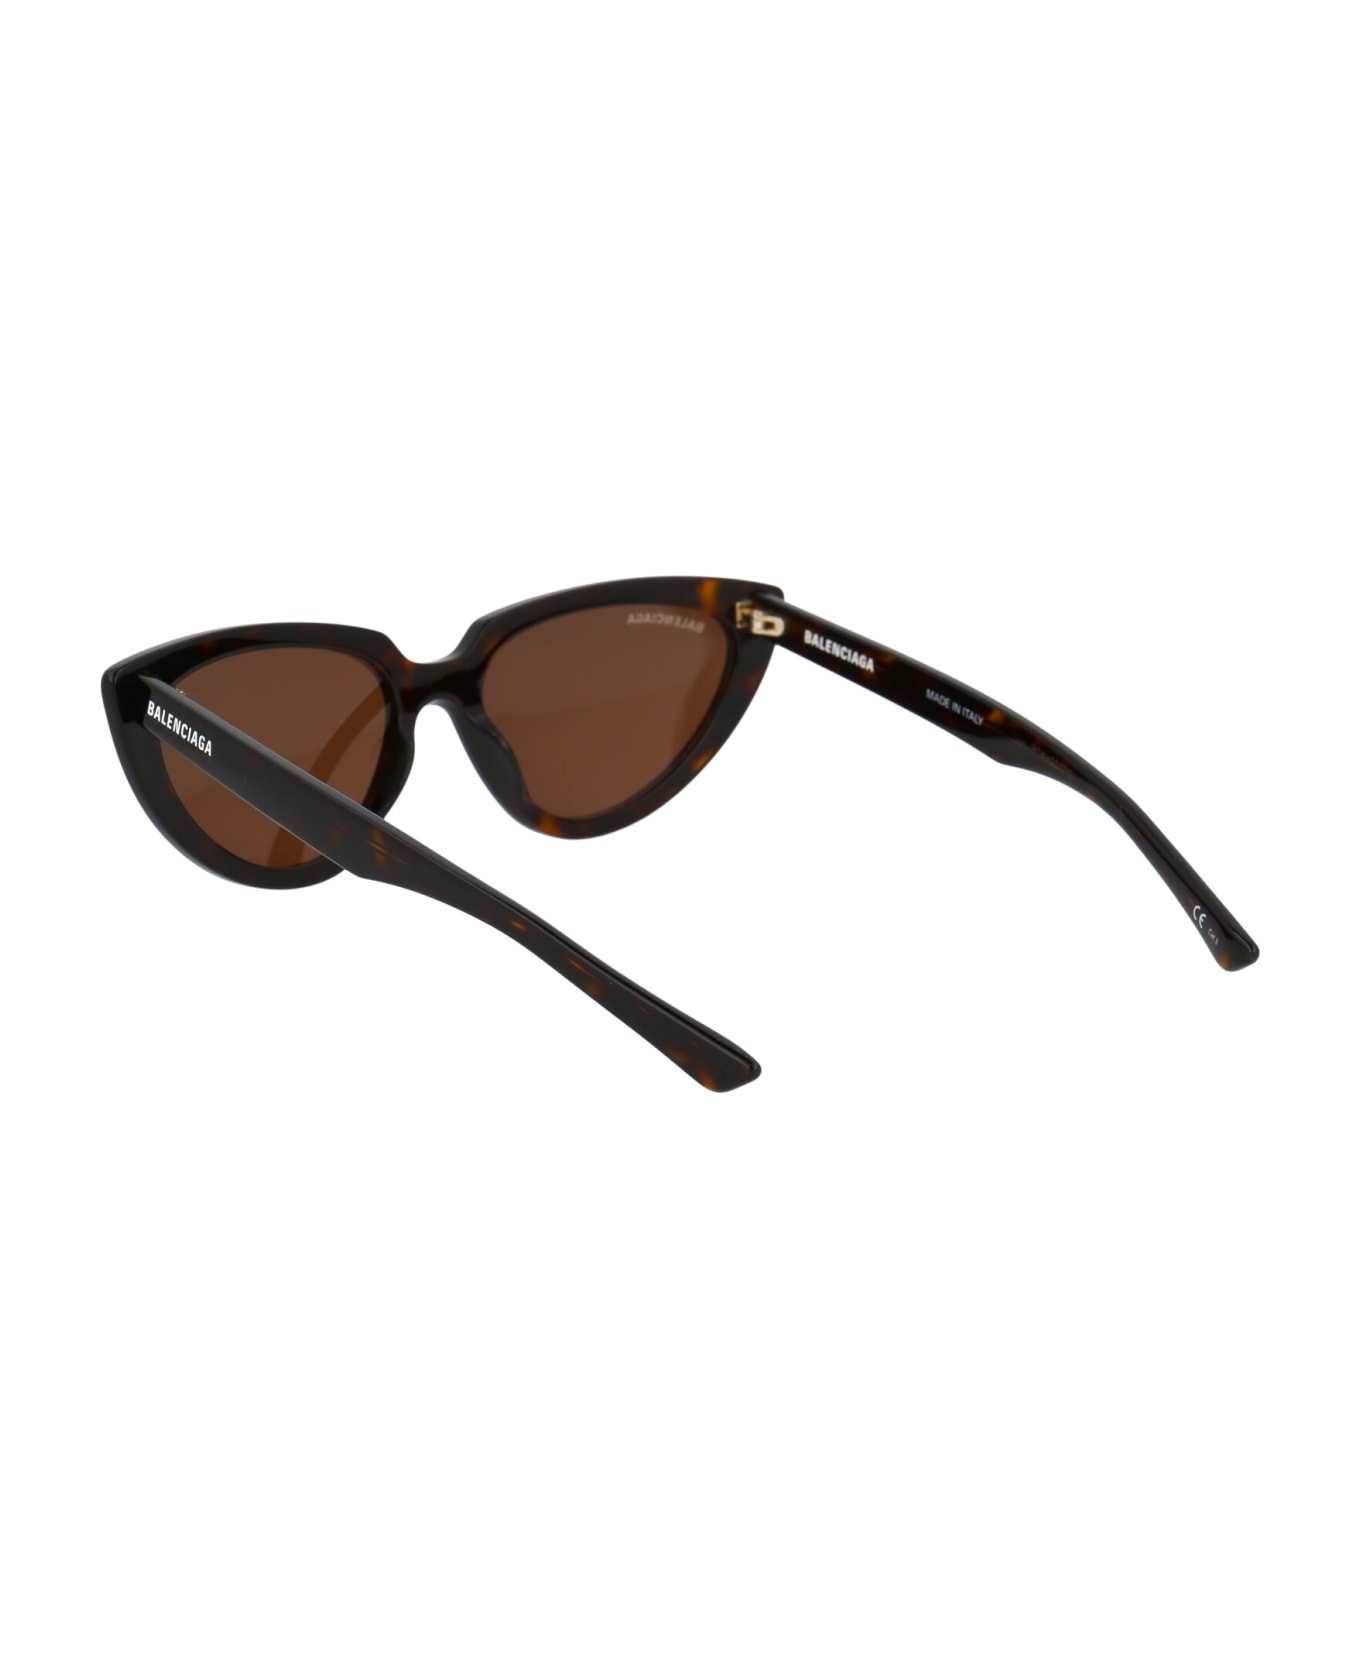 Balenciaga Eyewear Bb0182s Sunglasses - 002 HAVANA HAVANA BROWN サングラス